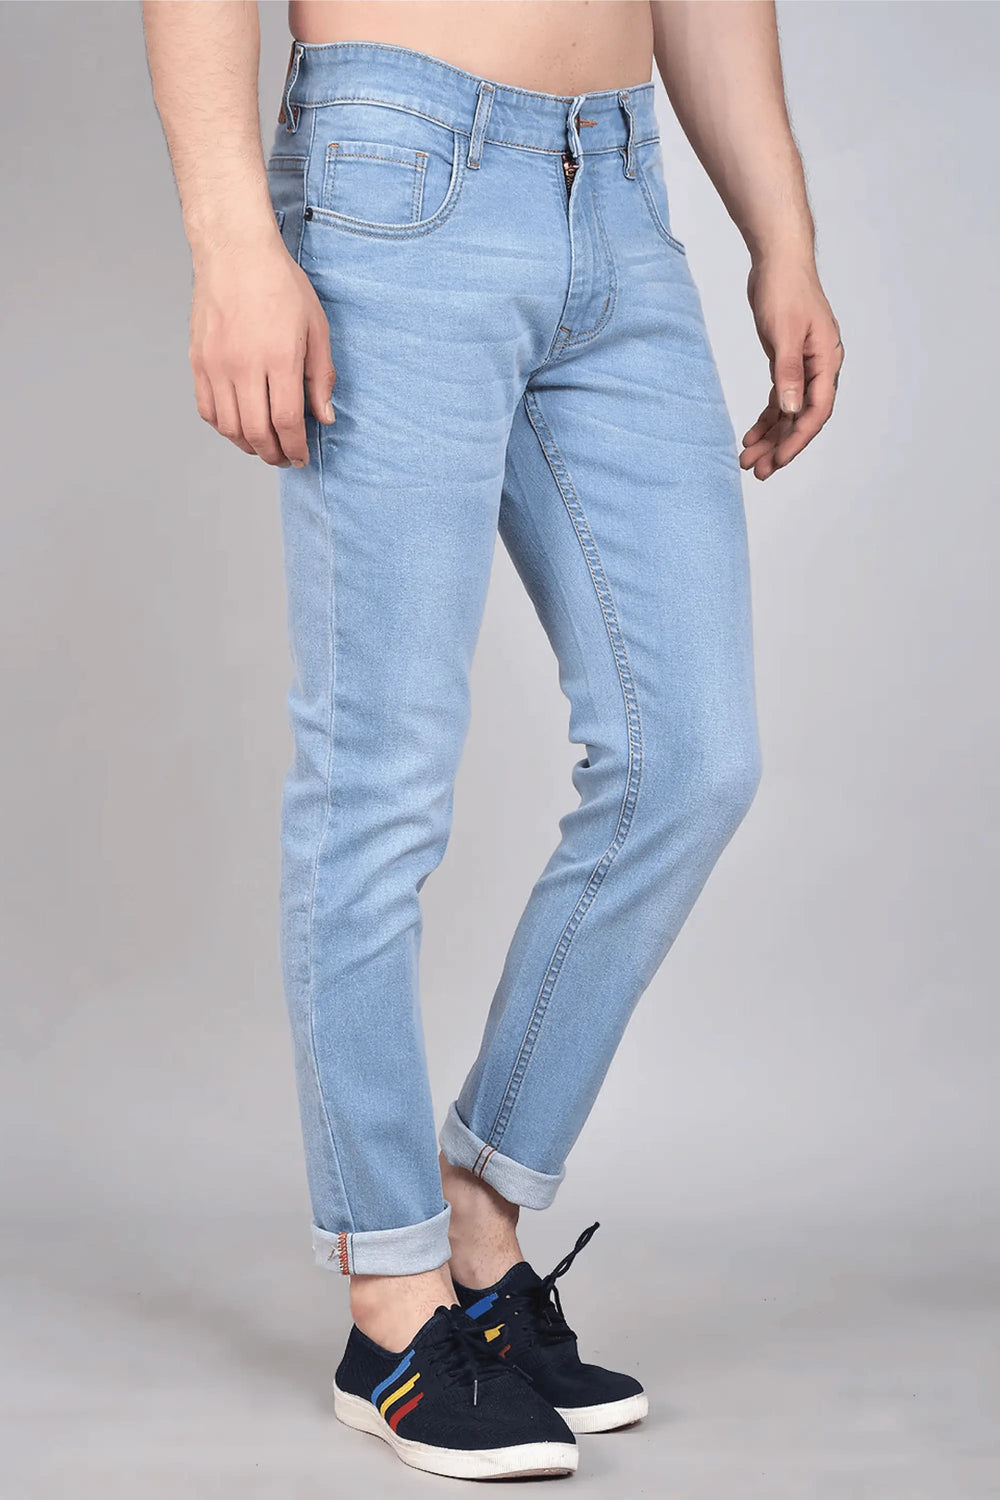 Skinny Fit Ankle Length Light Blue Men's Denim Jeans - Peplos Jeans 